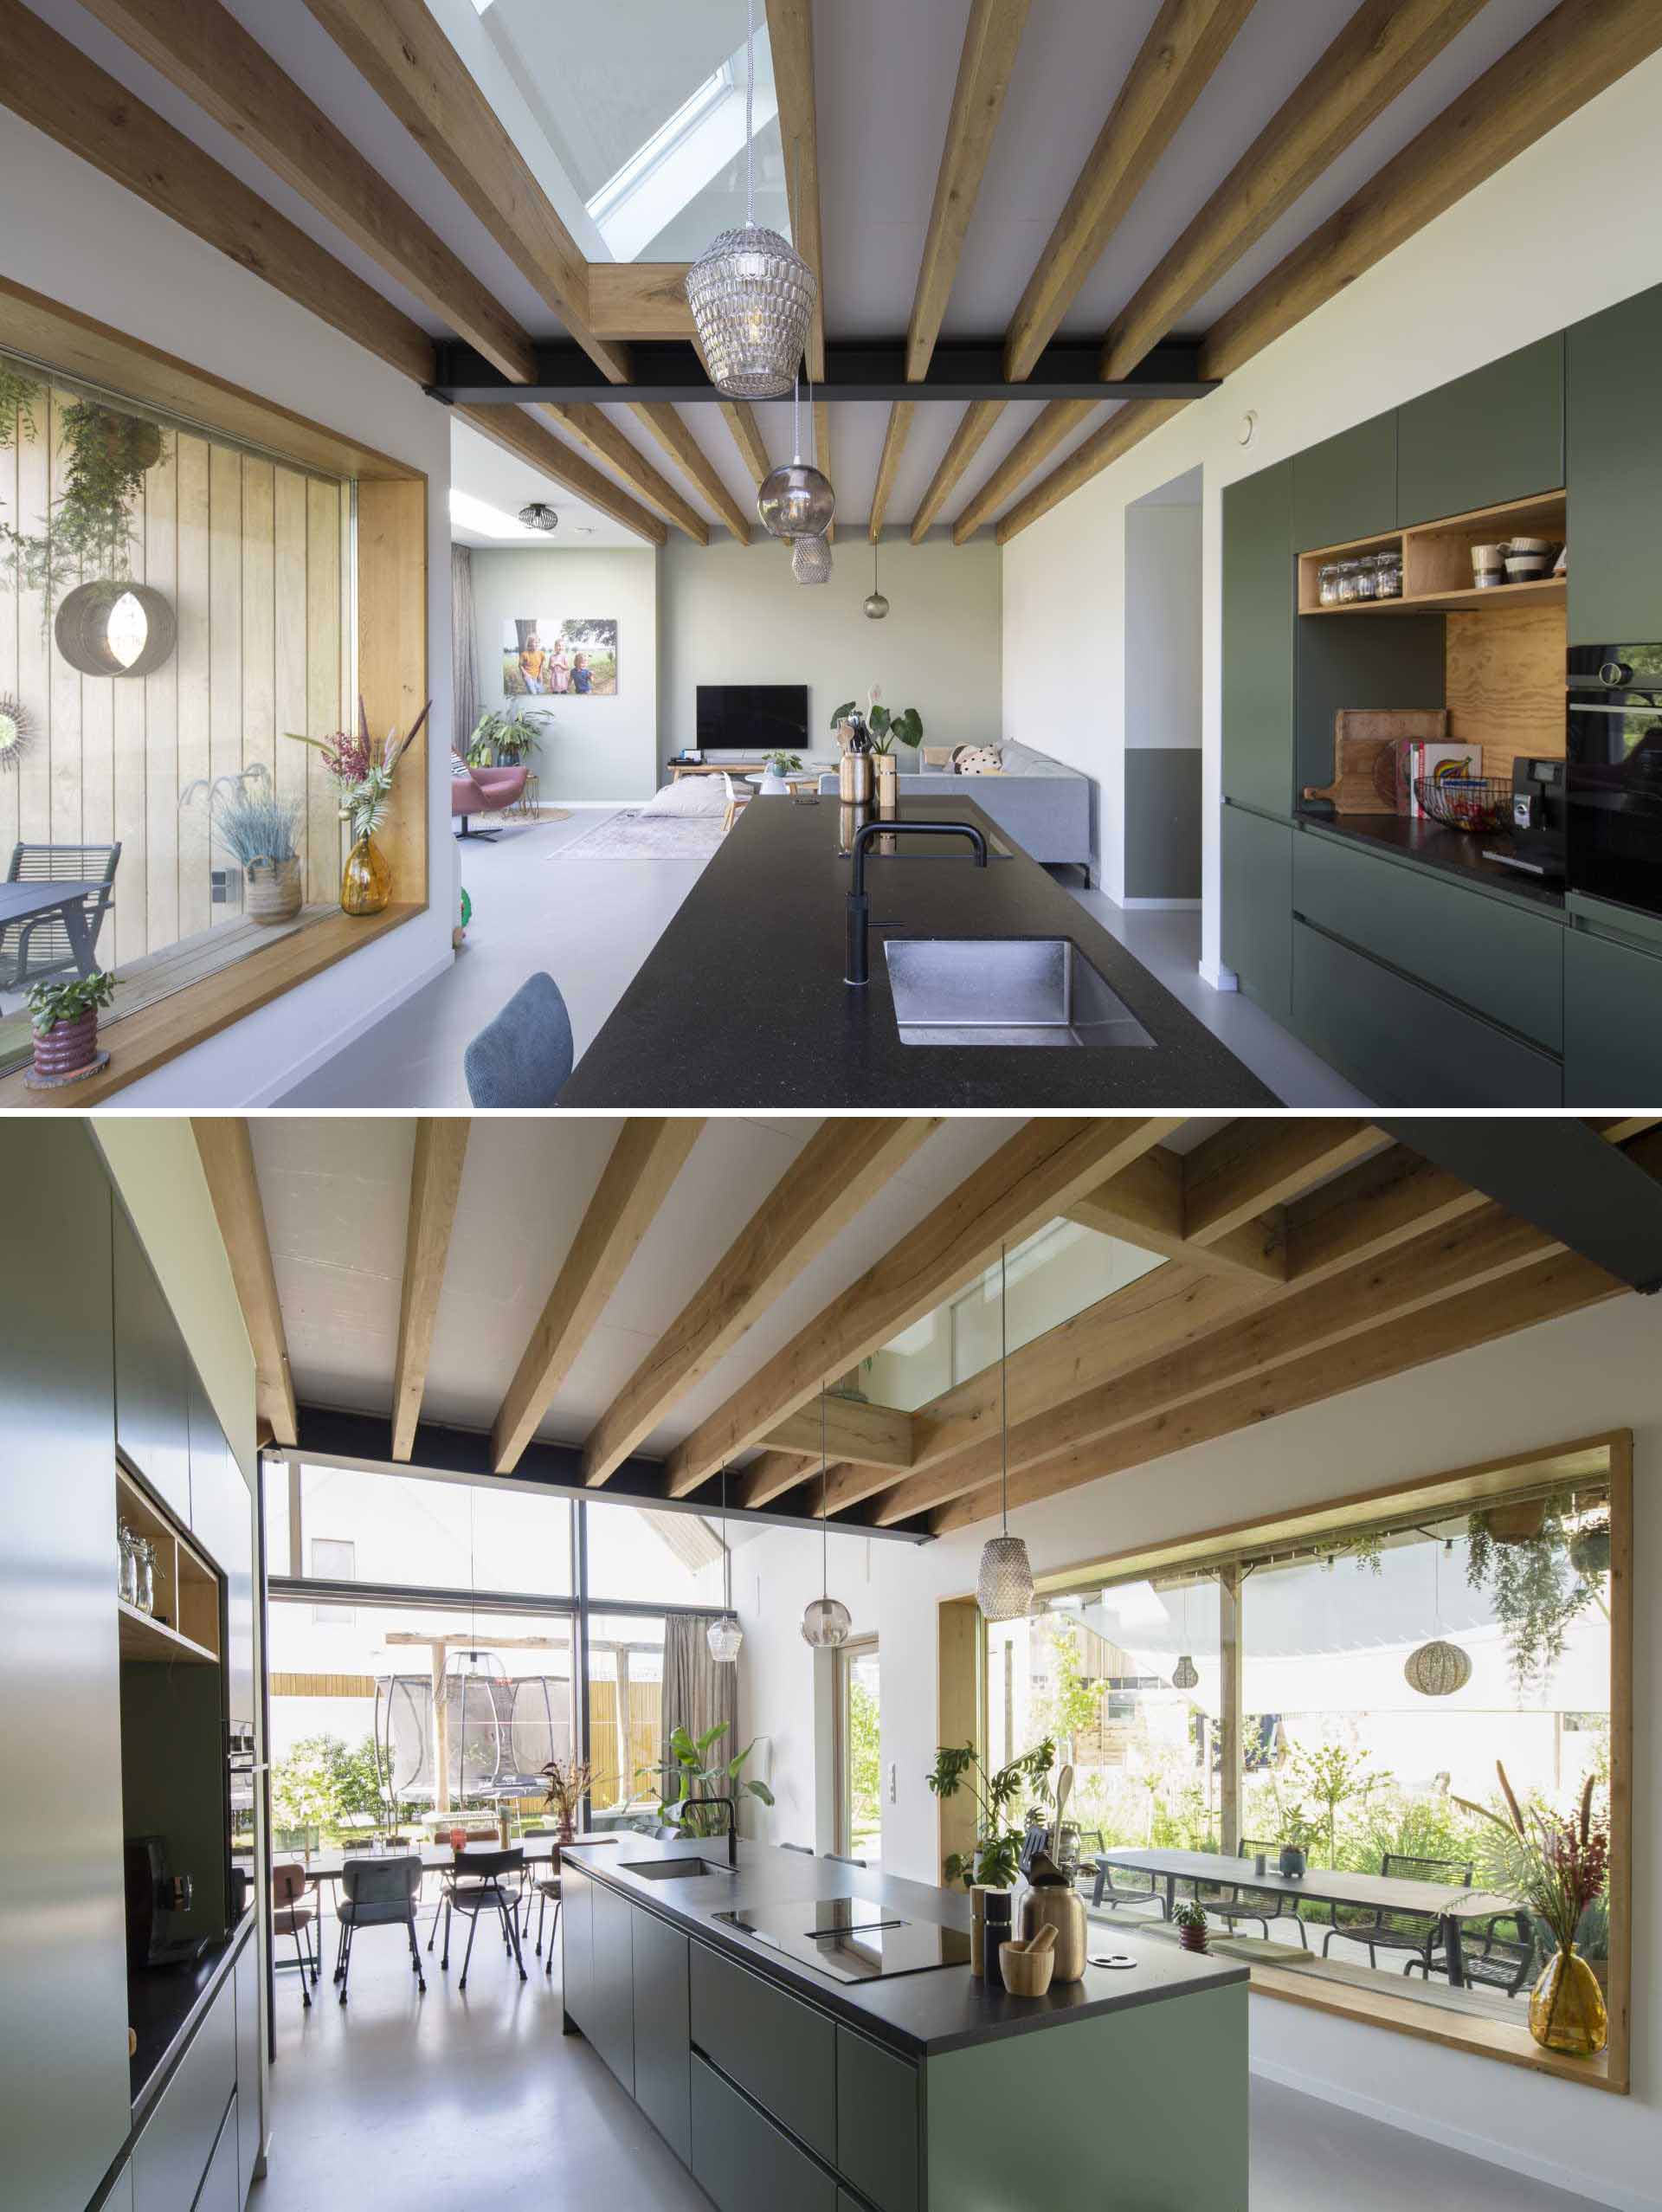 A modern kitchen with matte green cabinets, an island, and a deep window sill.